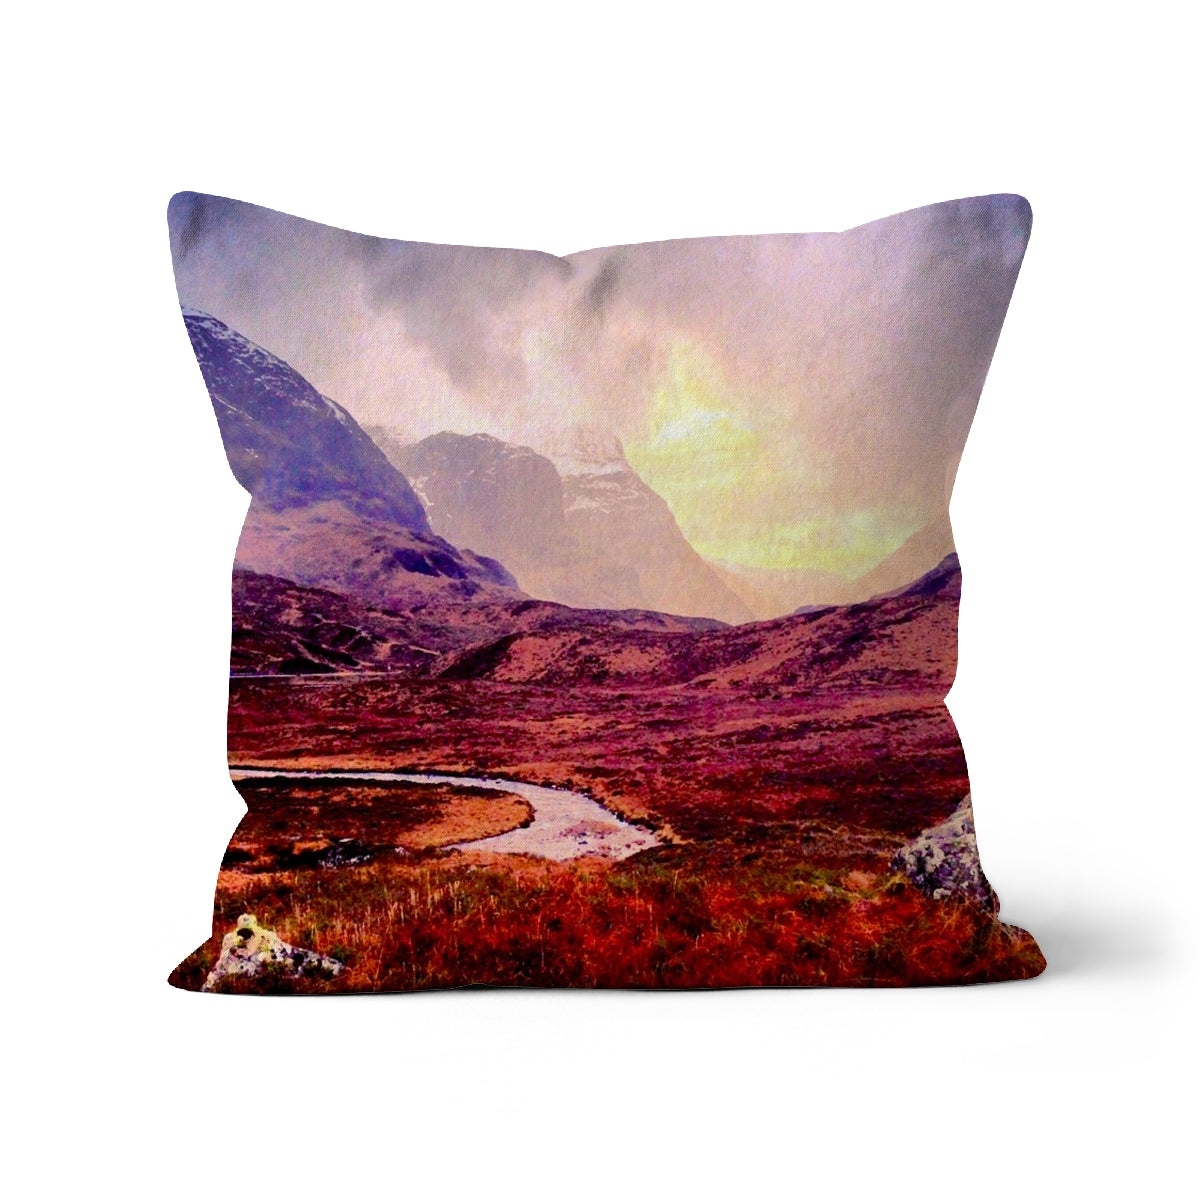 A Brooding Glencoe Art Gifts Cushion-Cushions-Glencoe Art Gallery-Linen-22"x22"-Paintings, Prints, Homeware, Art Gifts From Scotland By Scottish Artist Kevin Hunter